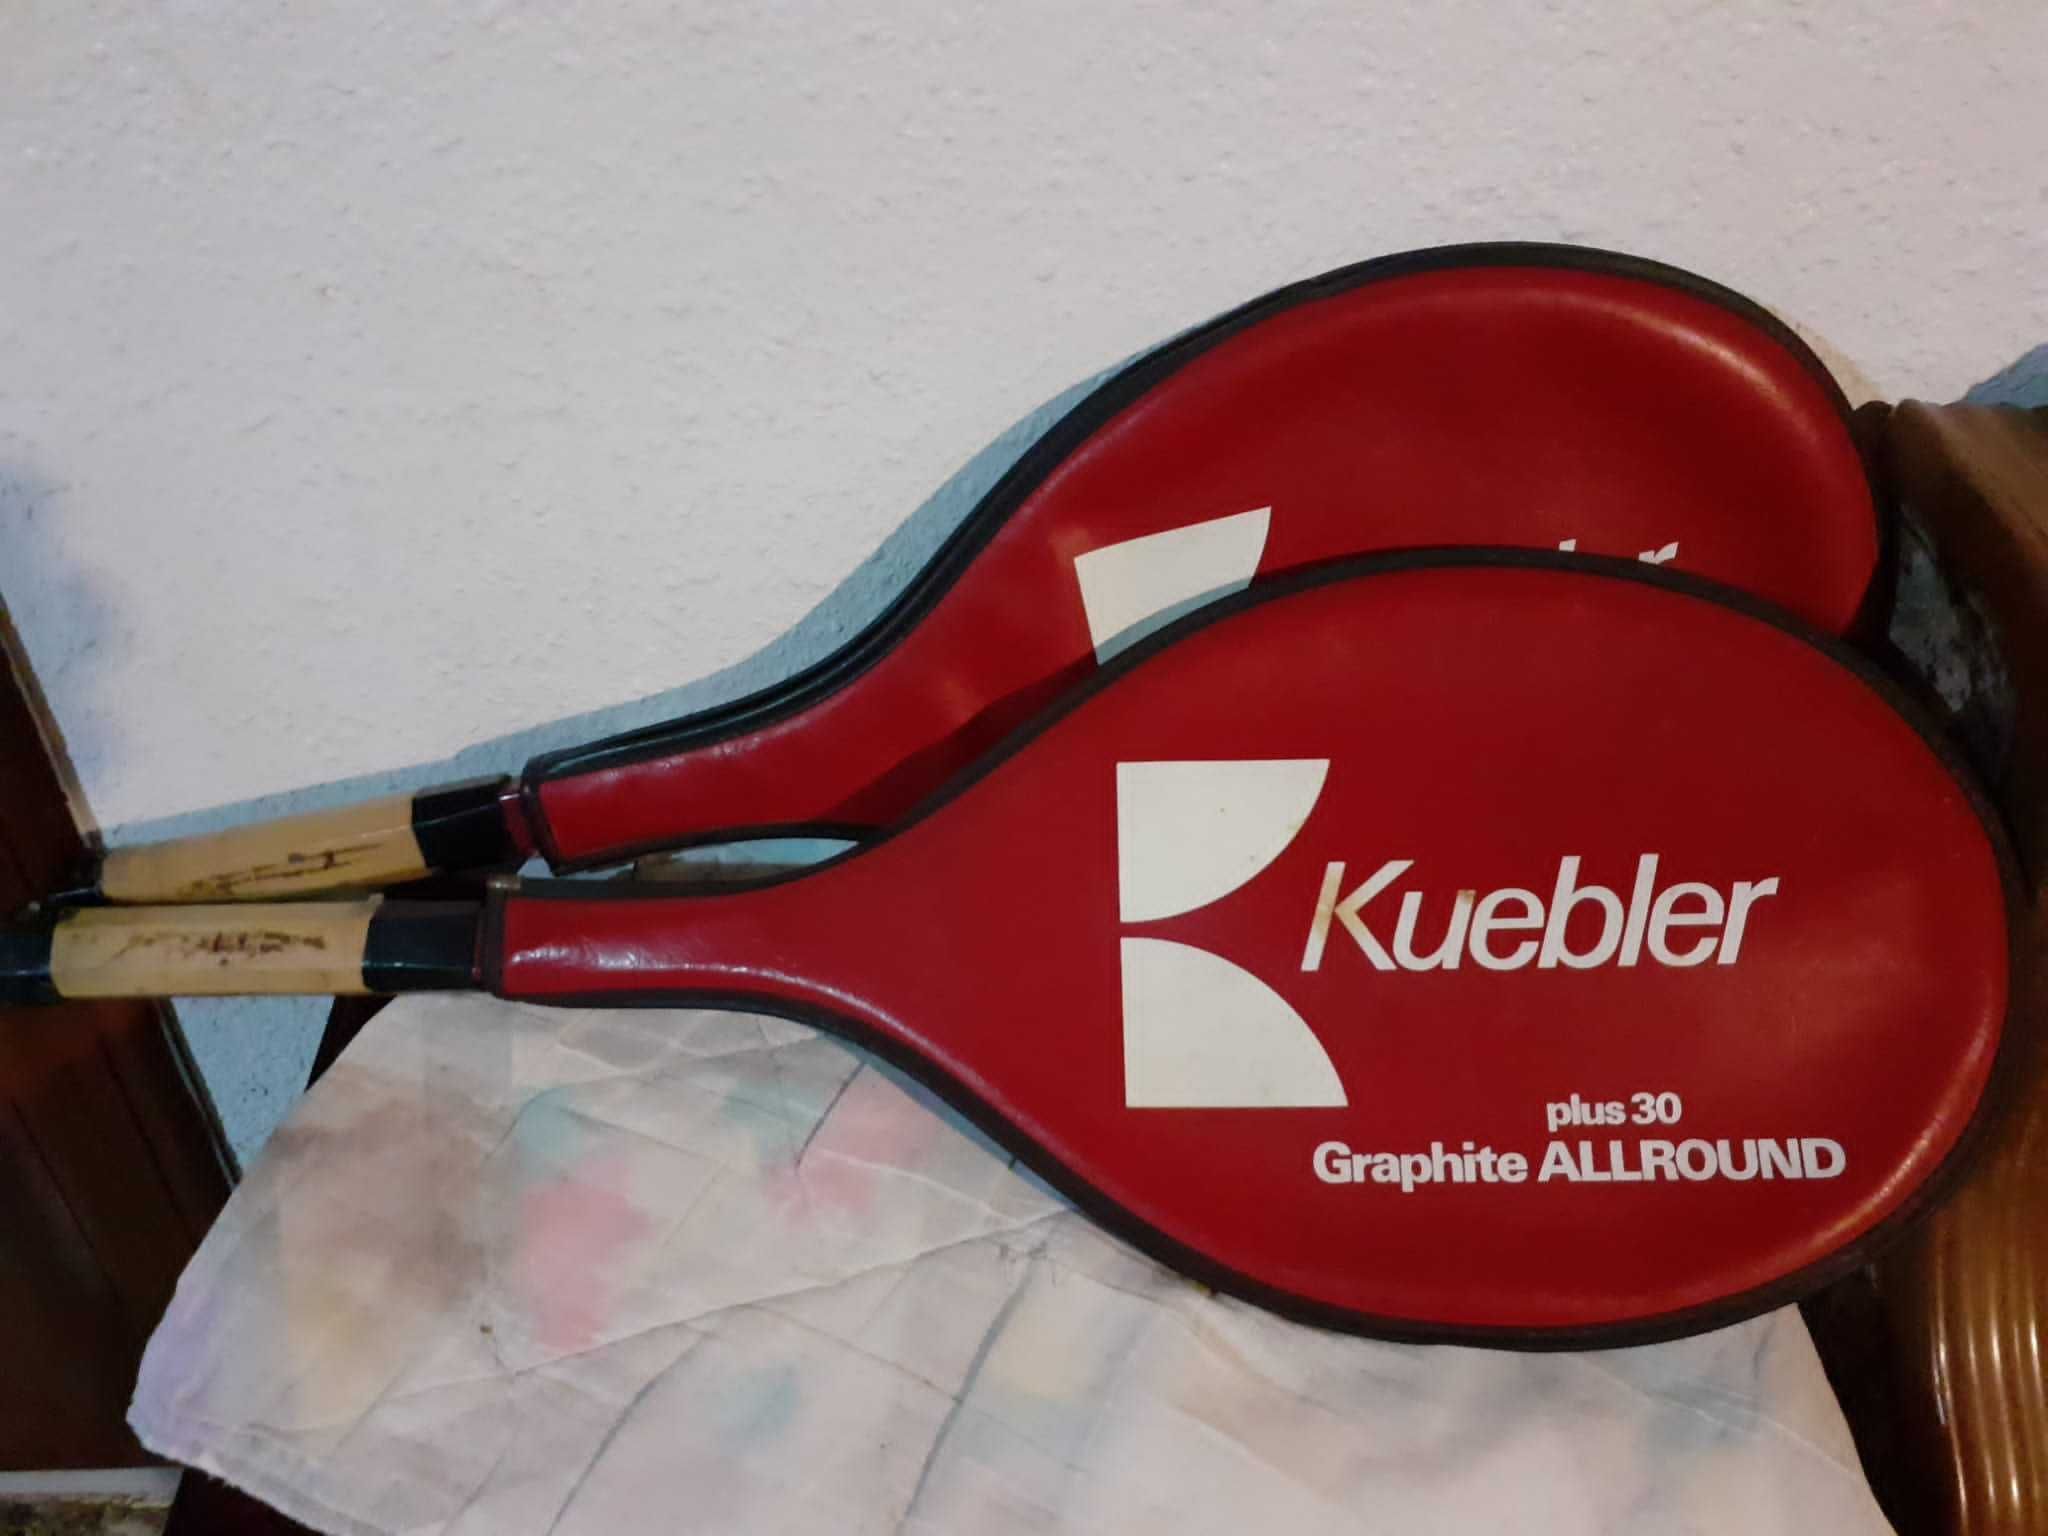 Racheta tenis Kuebler plus 30 graphite Allround